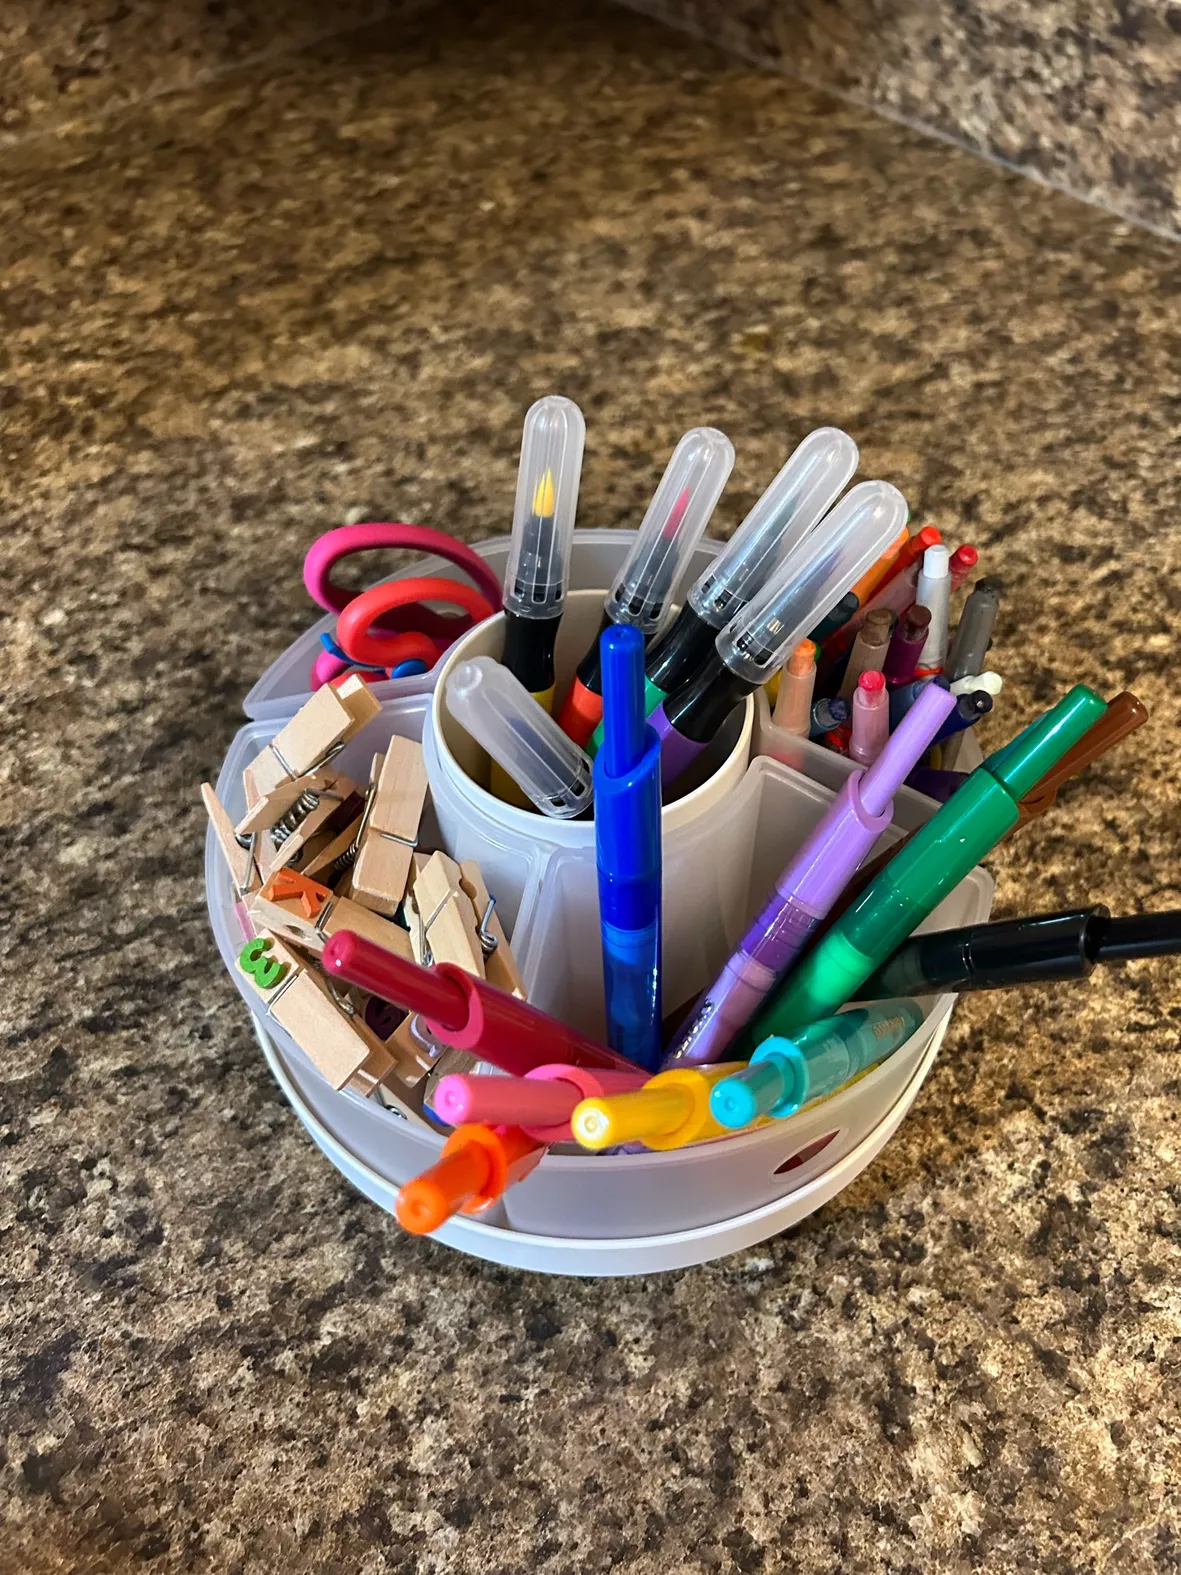 Crayola 5ct Paint Brush Pens